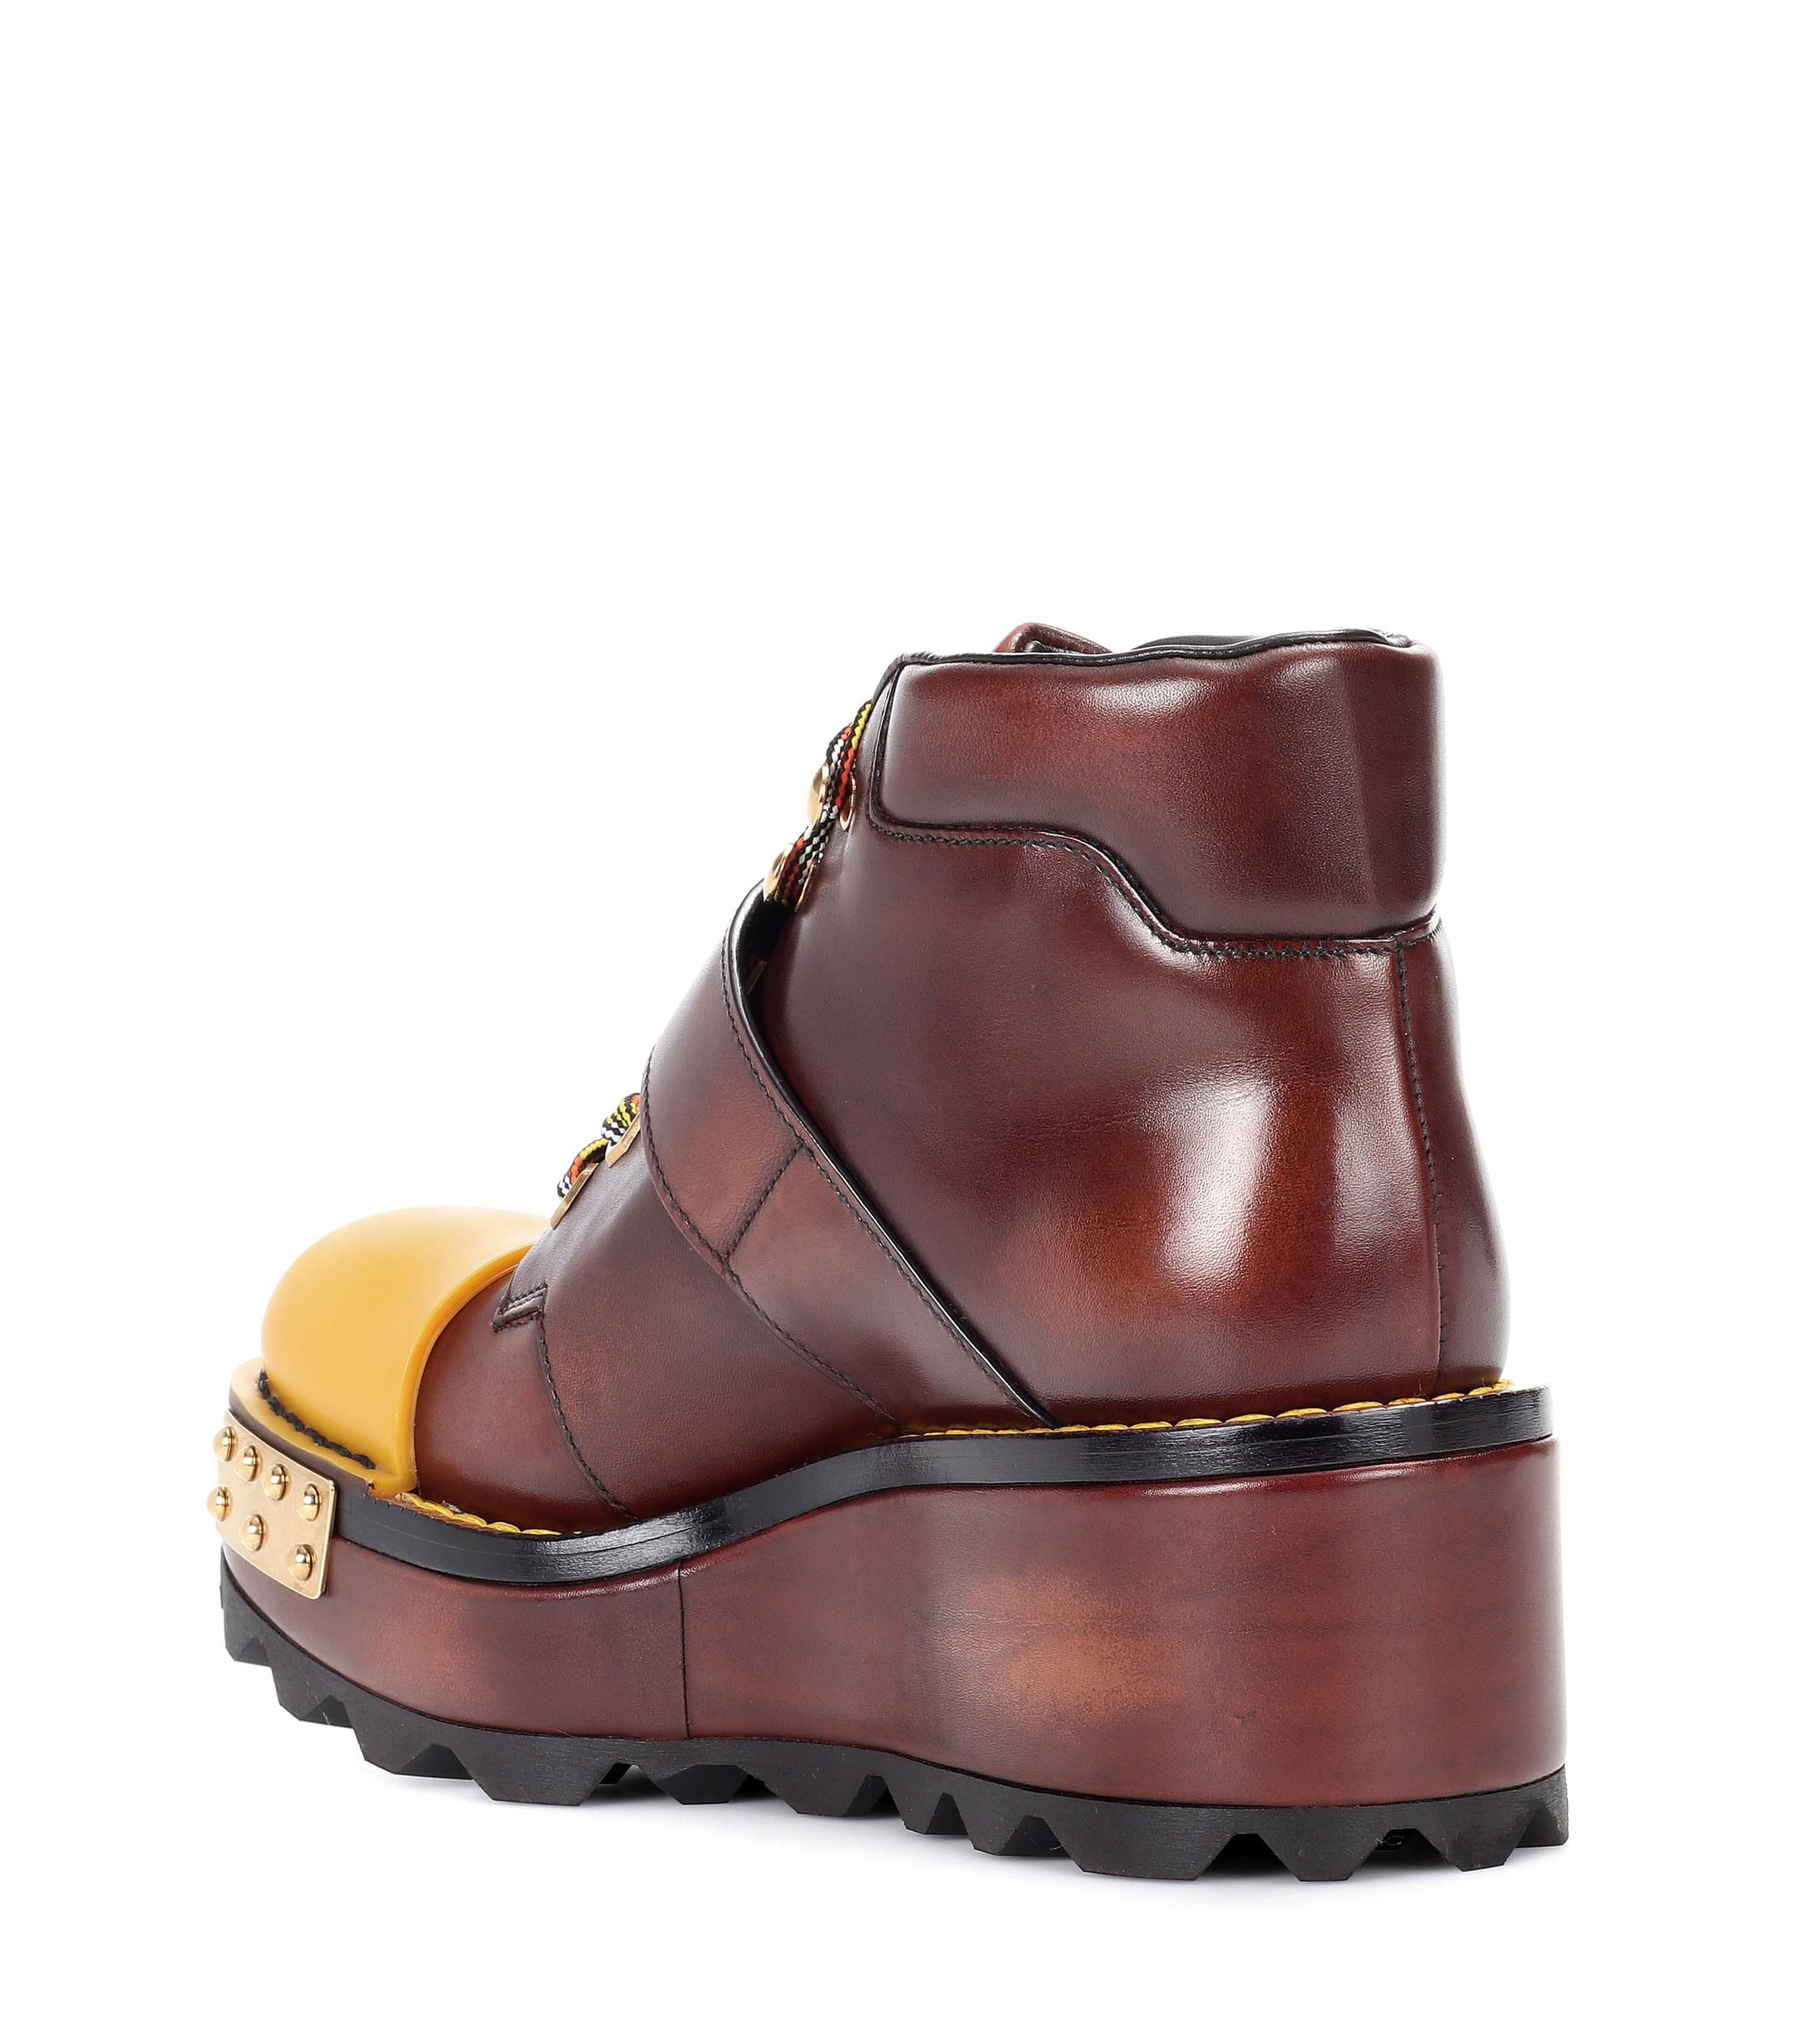 Prada Leather Platform Boots in Brown Lyst